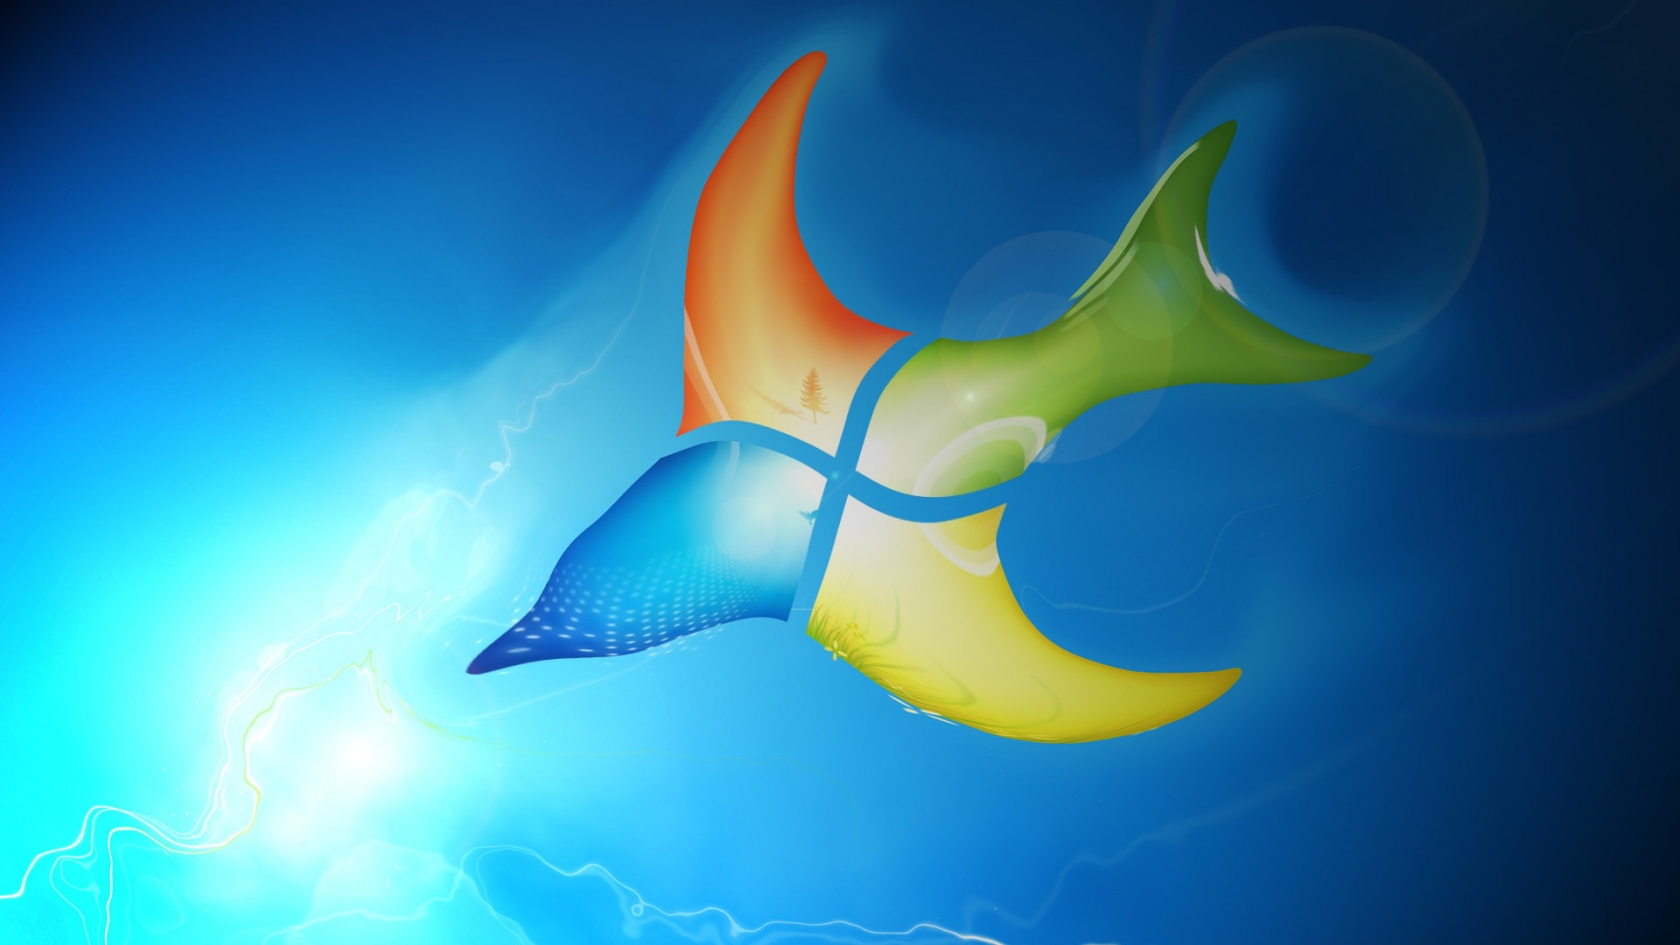 Windows Bird Logo for 1680 x 945 HDTV resolution